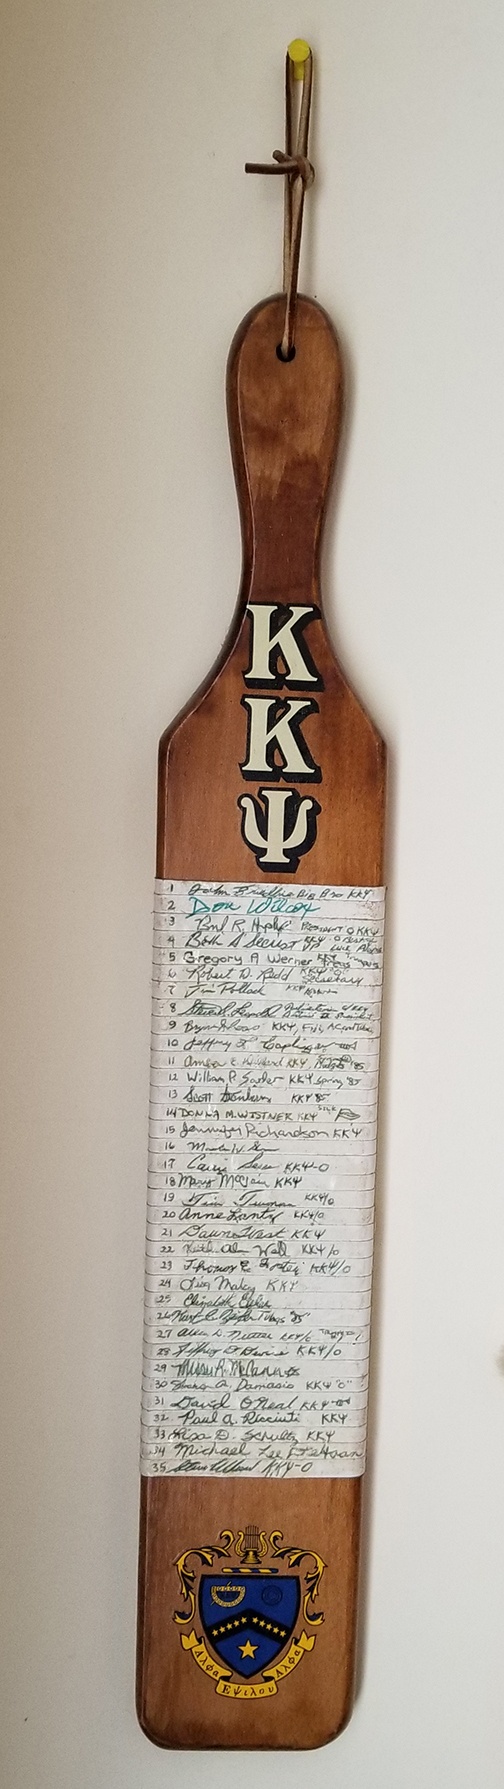 My Kappa Kappa Spi paddle